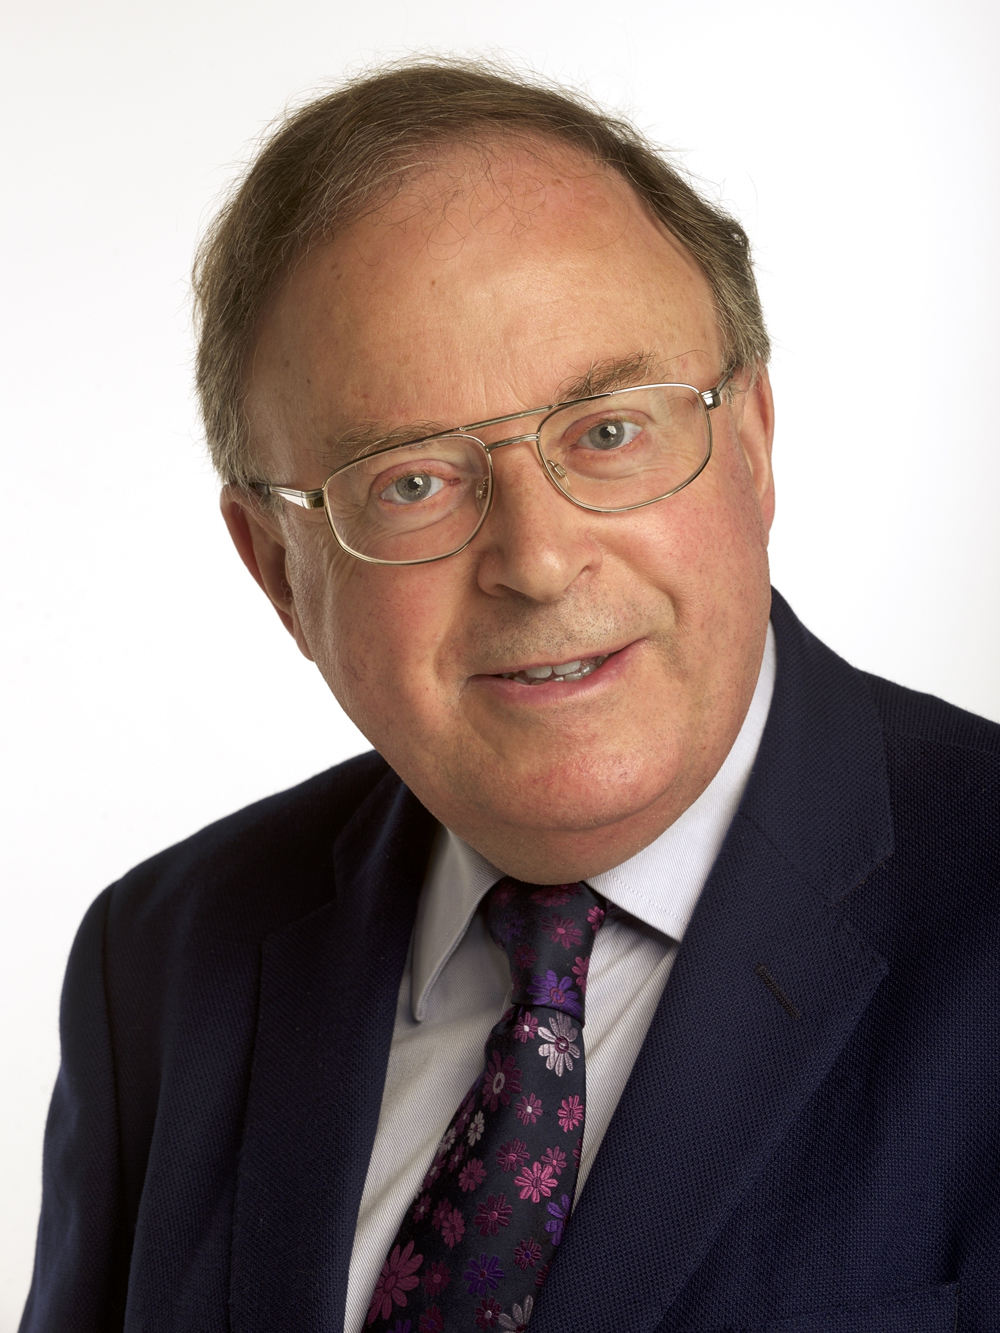 Jim O’Brien, honorary president of UEPG